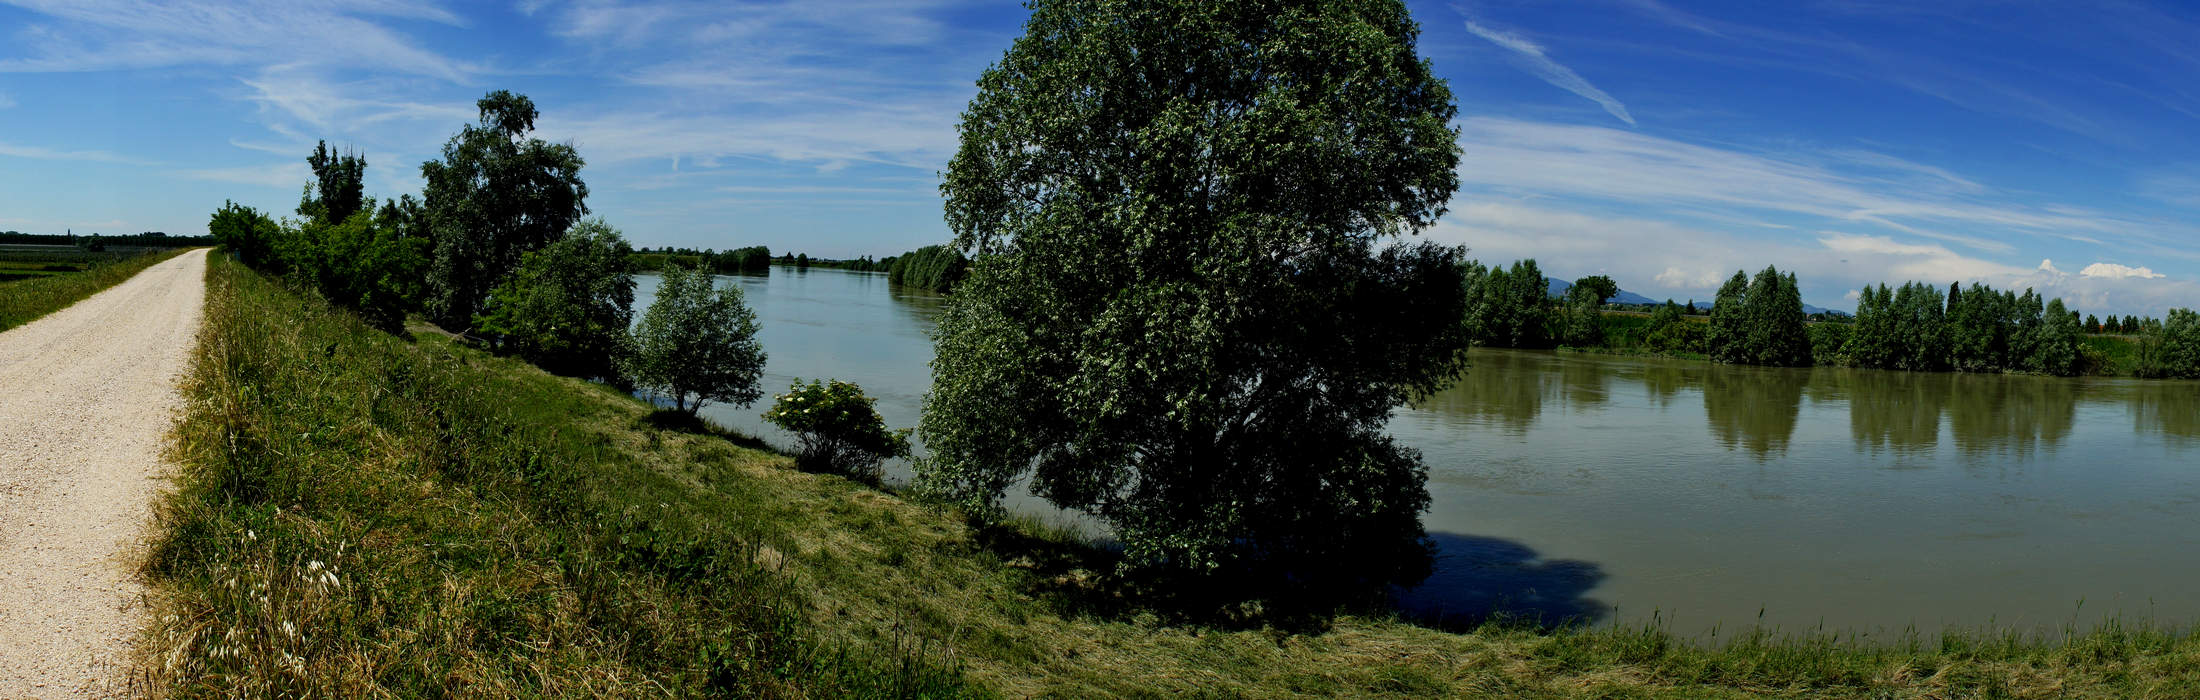 il fiume Adige, argine a Boara Polesine